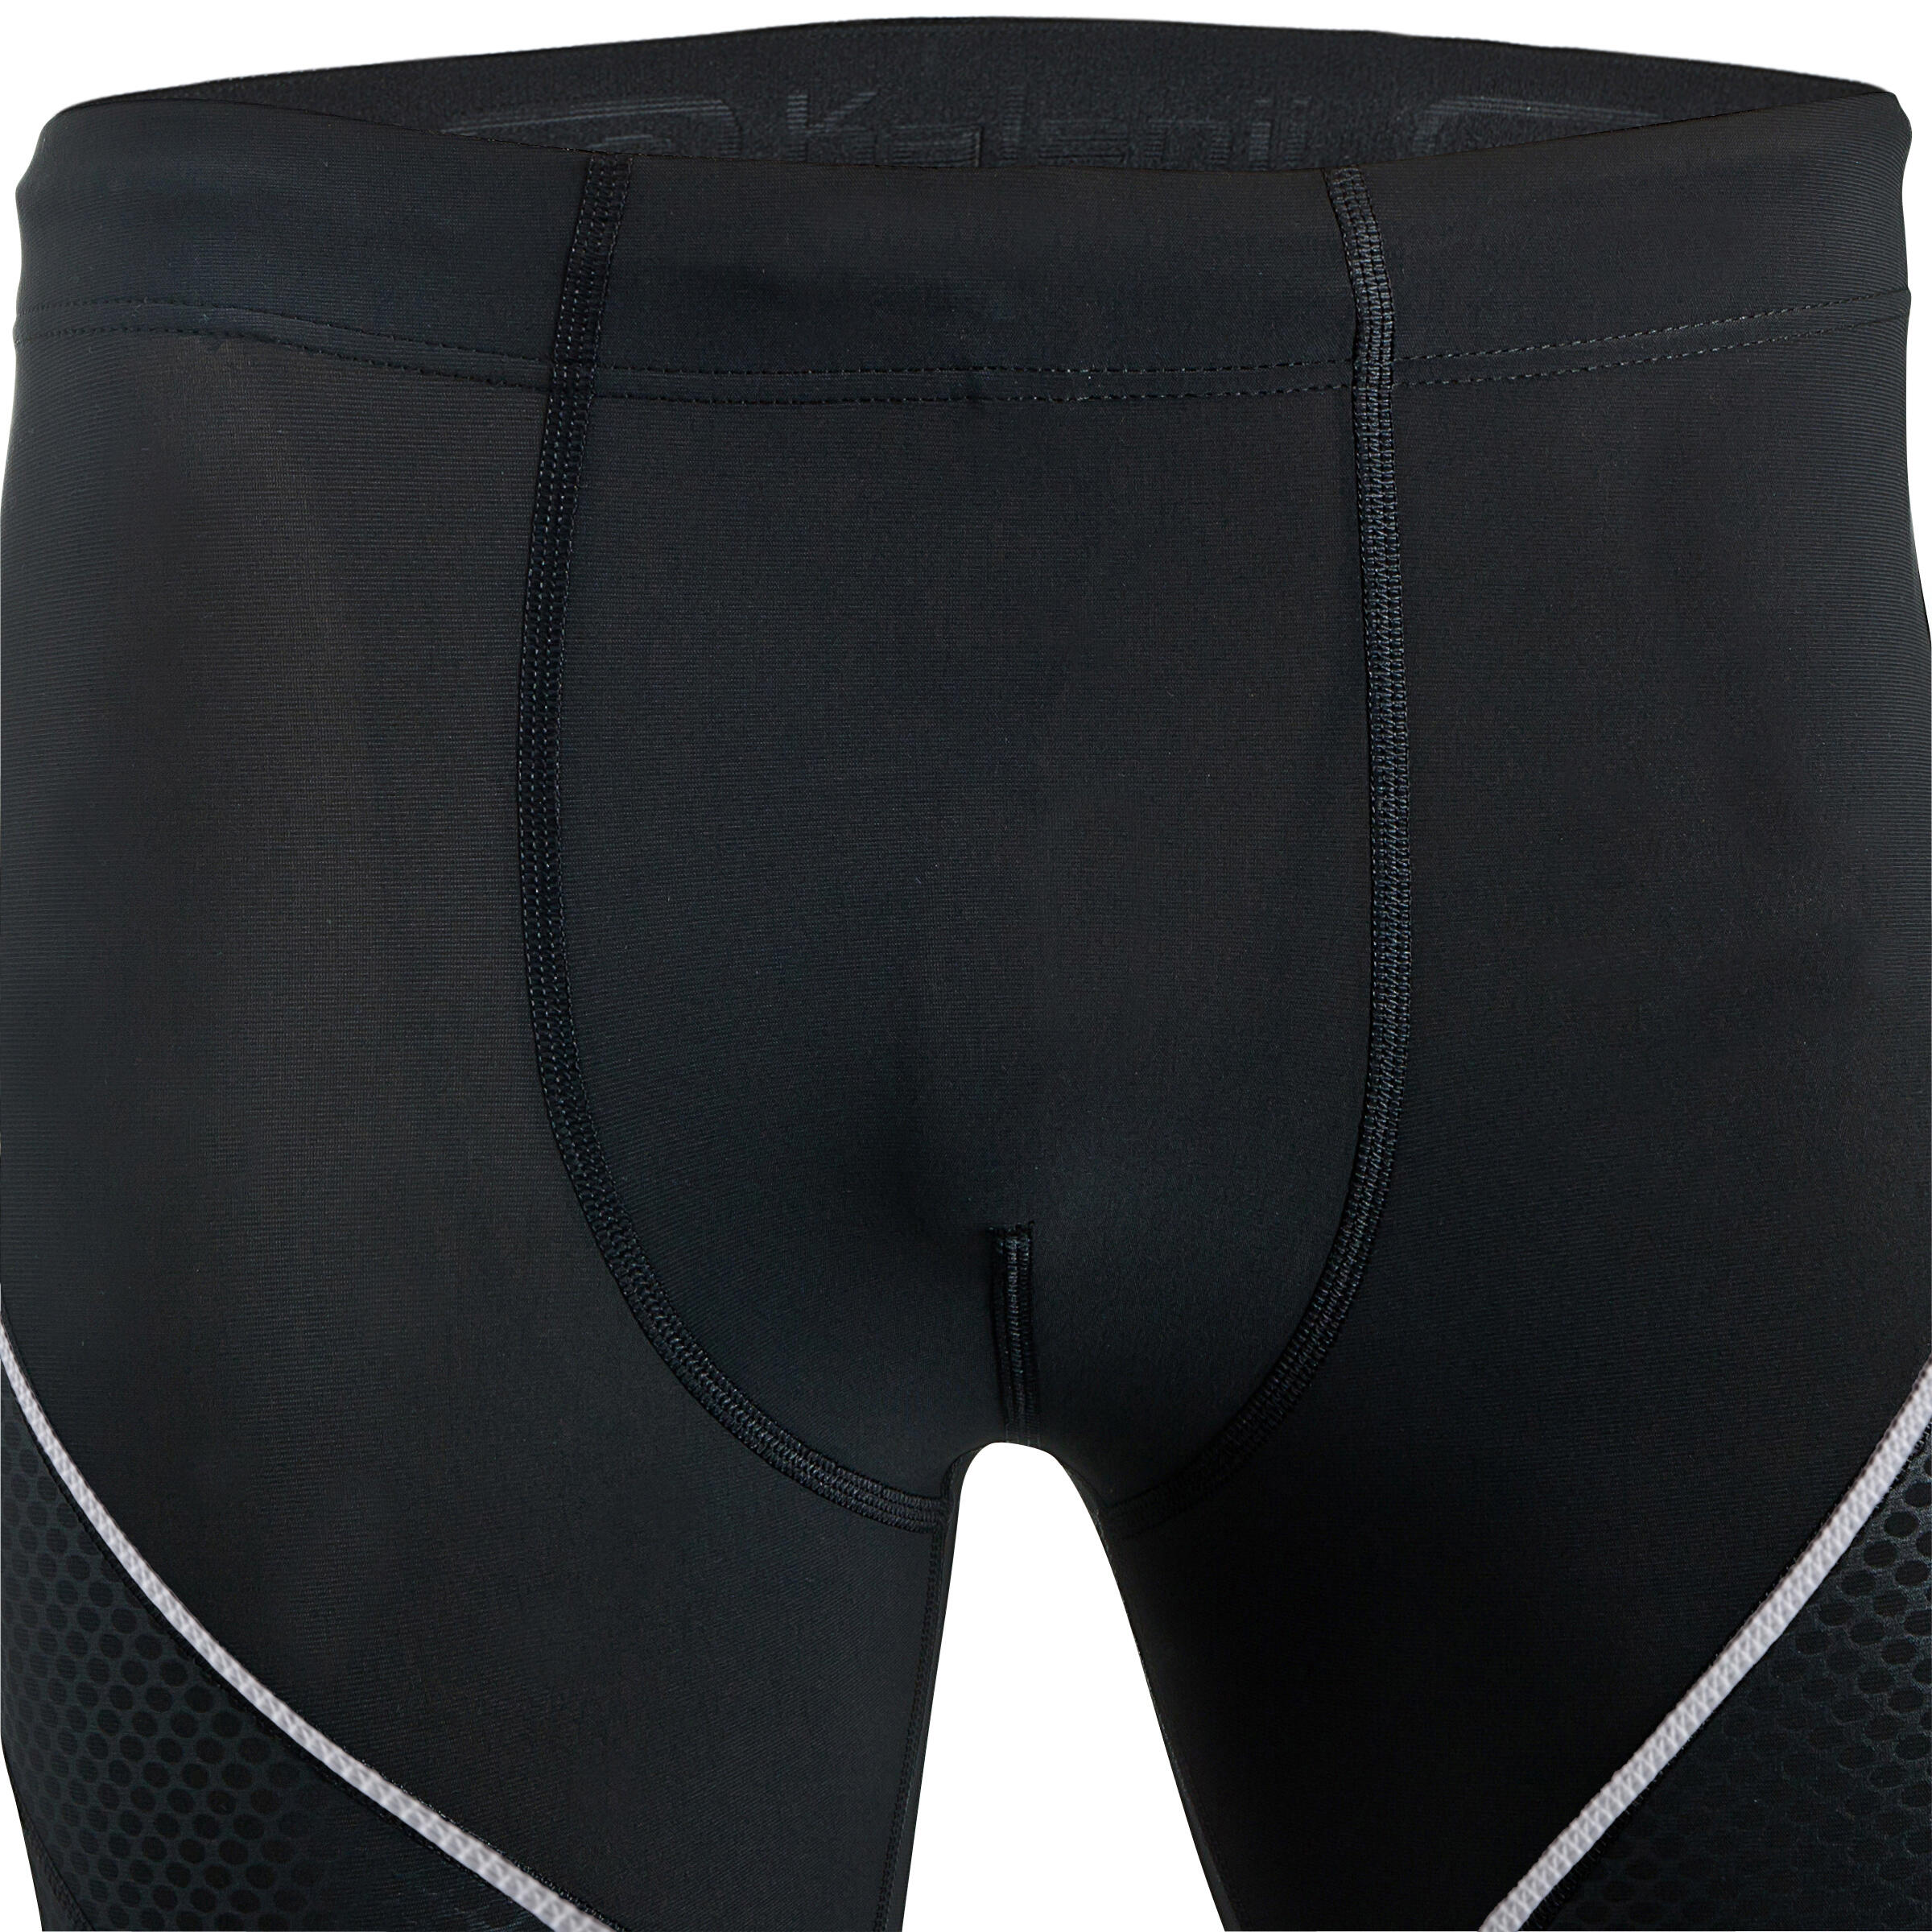 Kanergy Running Men's Tight Shorts - black 5/12